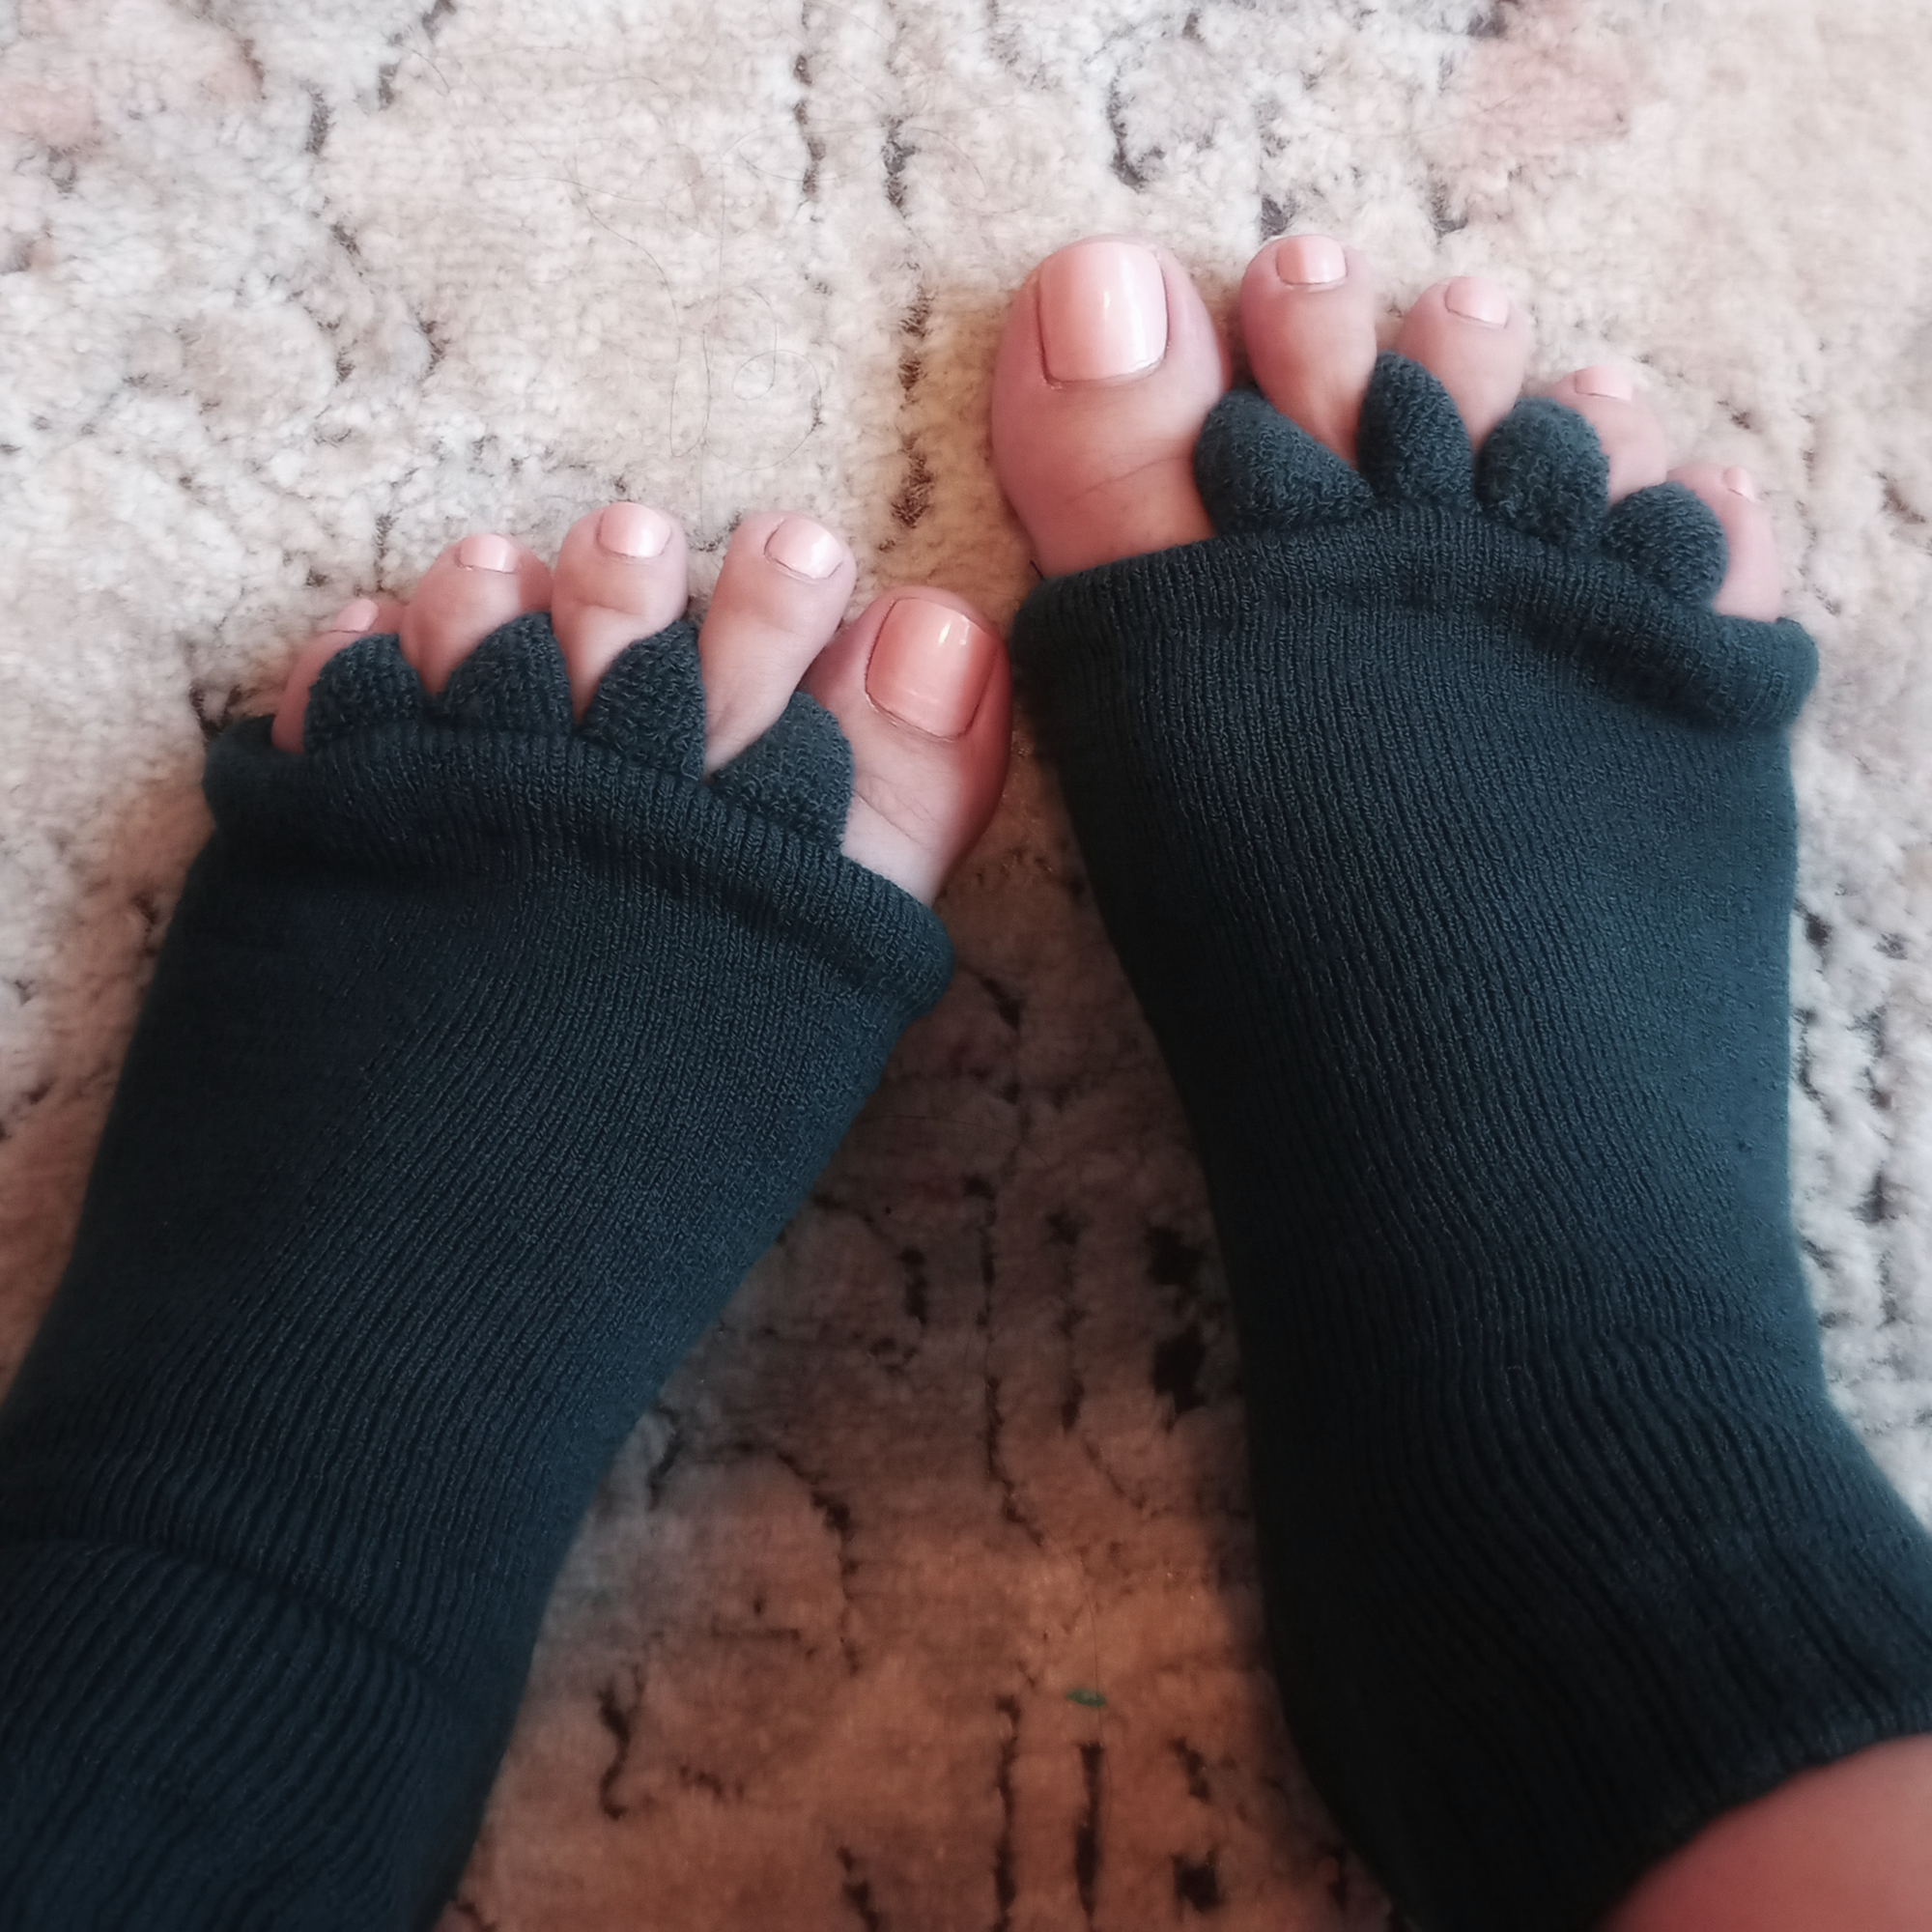  SPORLCO Toe Separator Socks for Men Women Comfy Foot